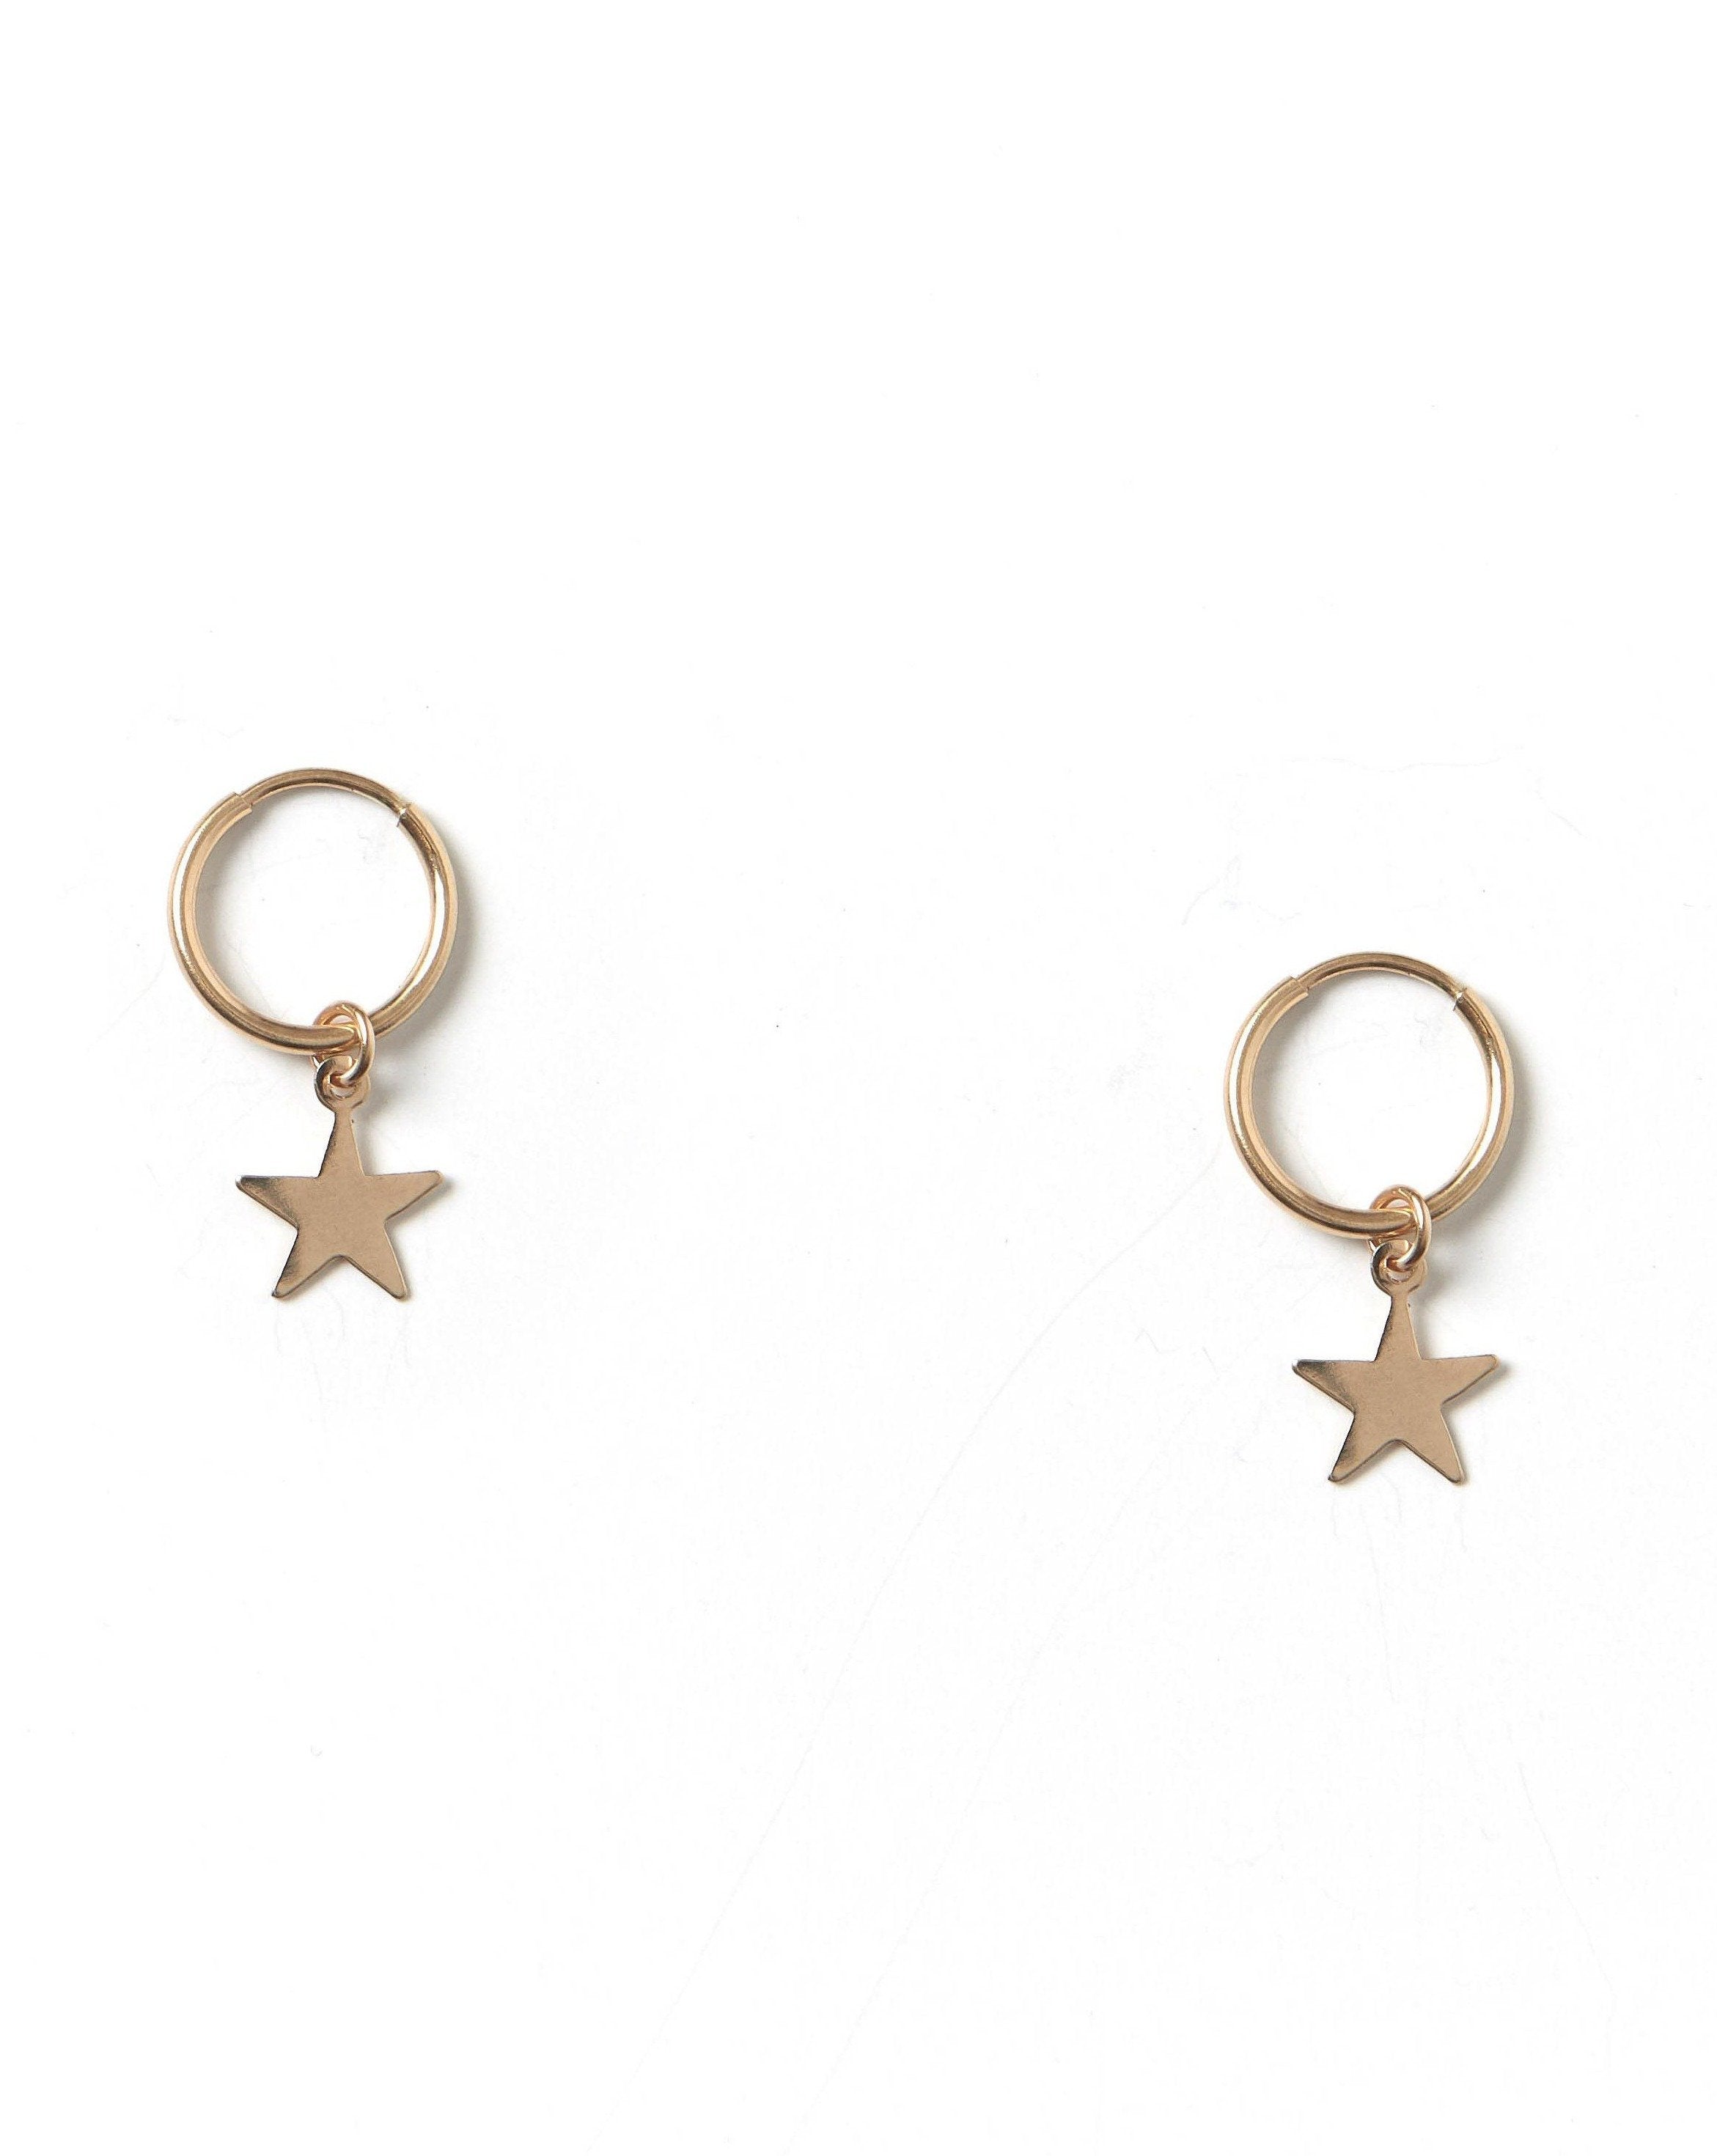 Kisstar Hoop Earrings by KOZAKH. 12mm hoop earrings, crafted in 14K Gold Filled, featuring a star charm.